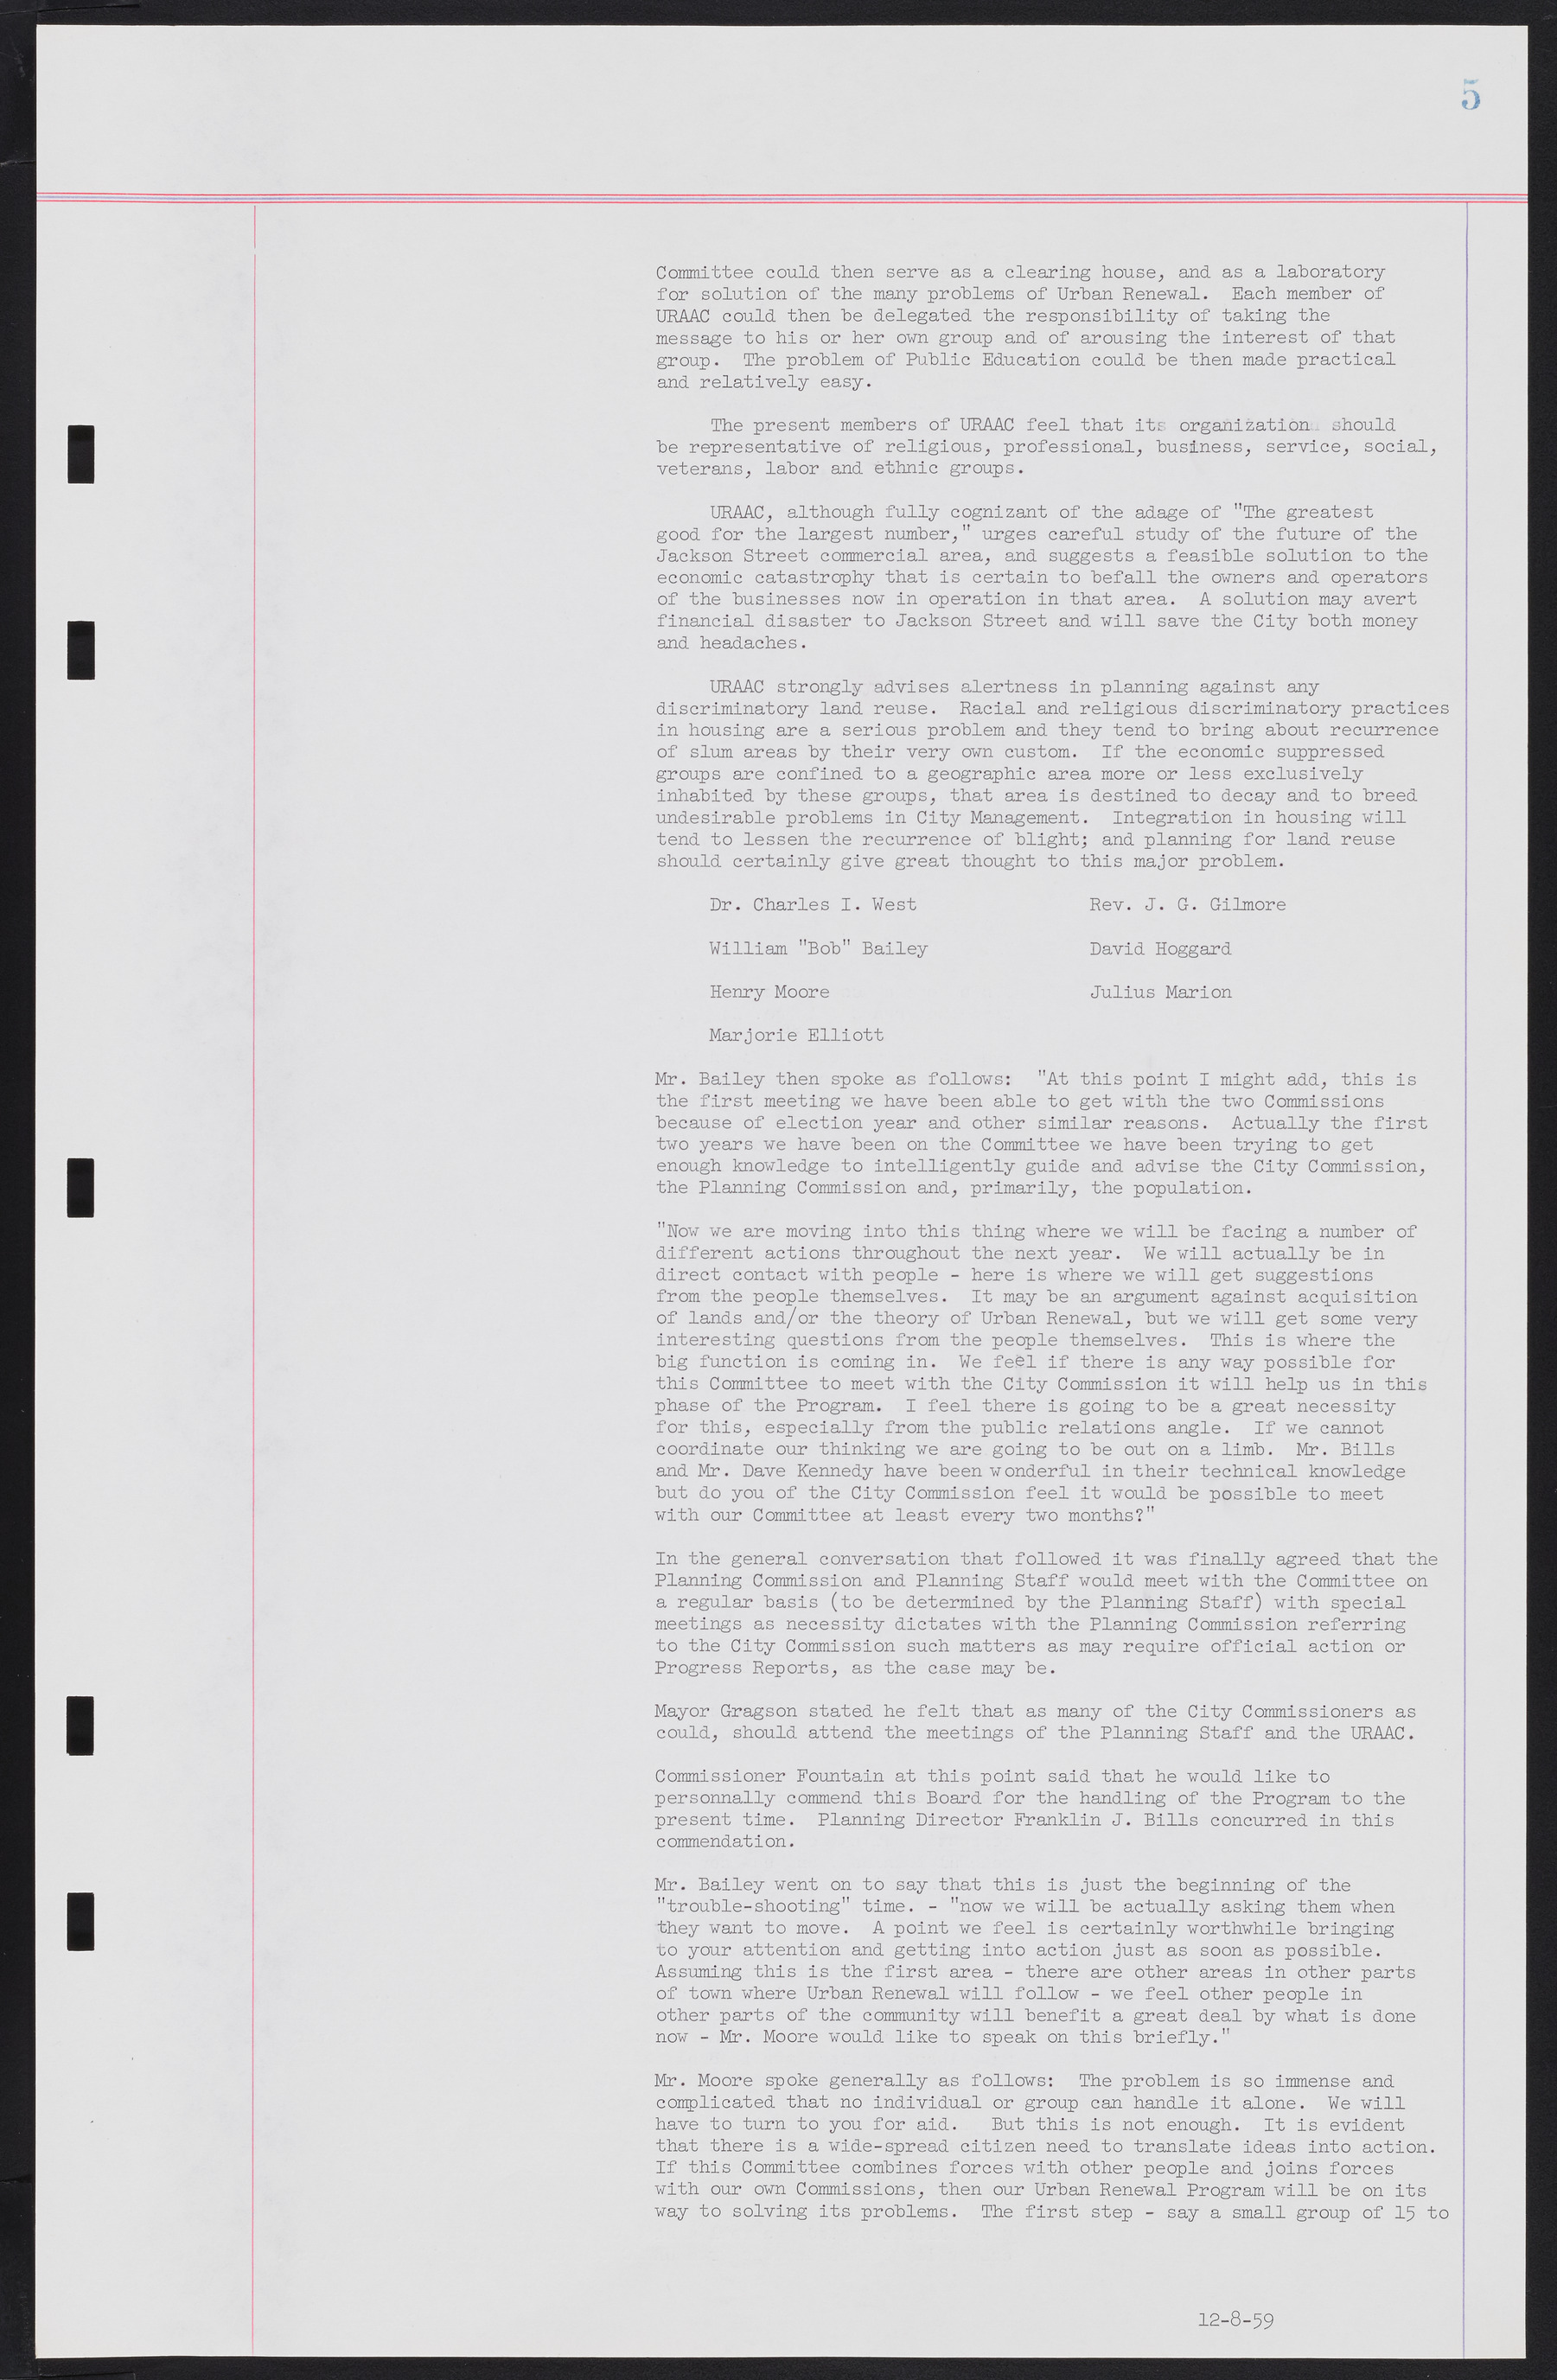 Las Vegas City Commission Minutes, December 8, 1959 to February 17, 1960, lvc000012-9